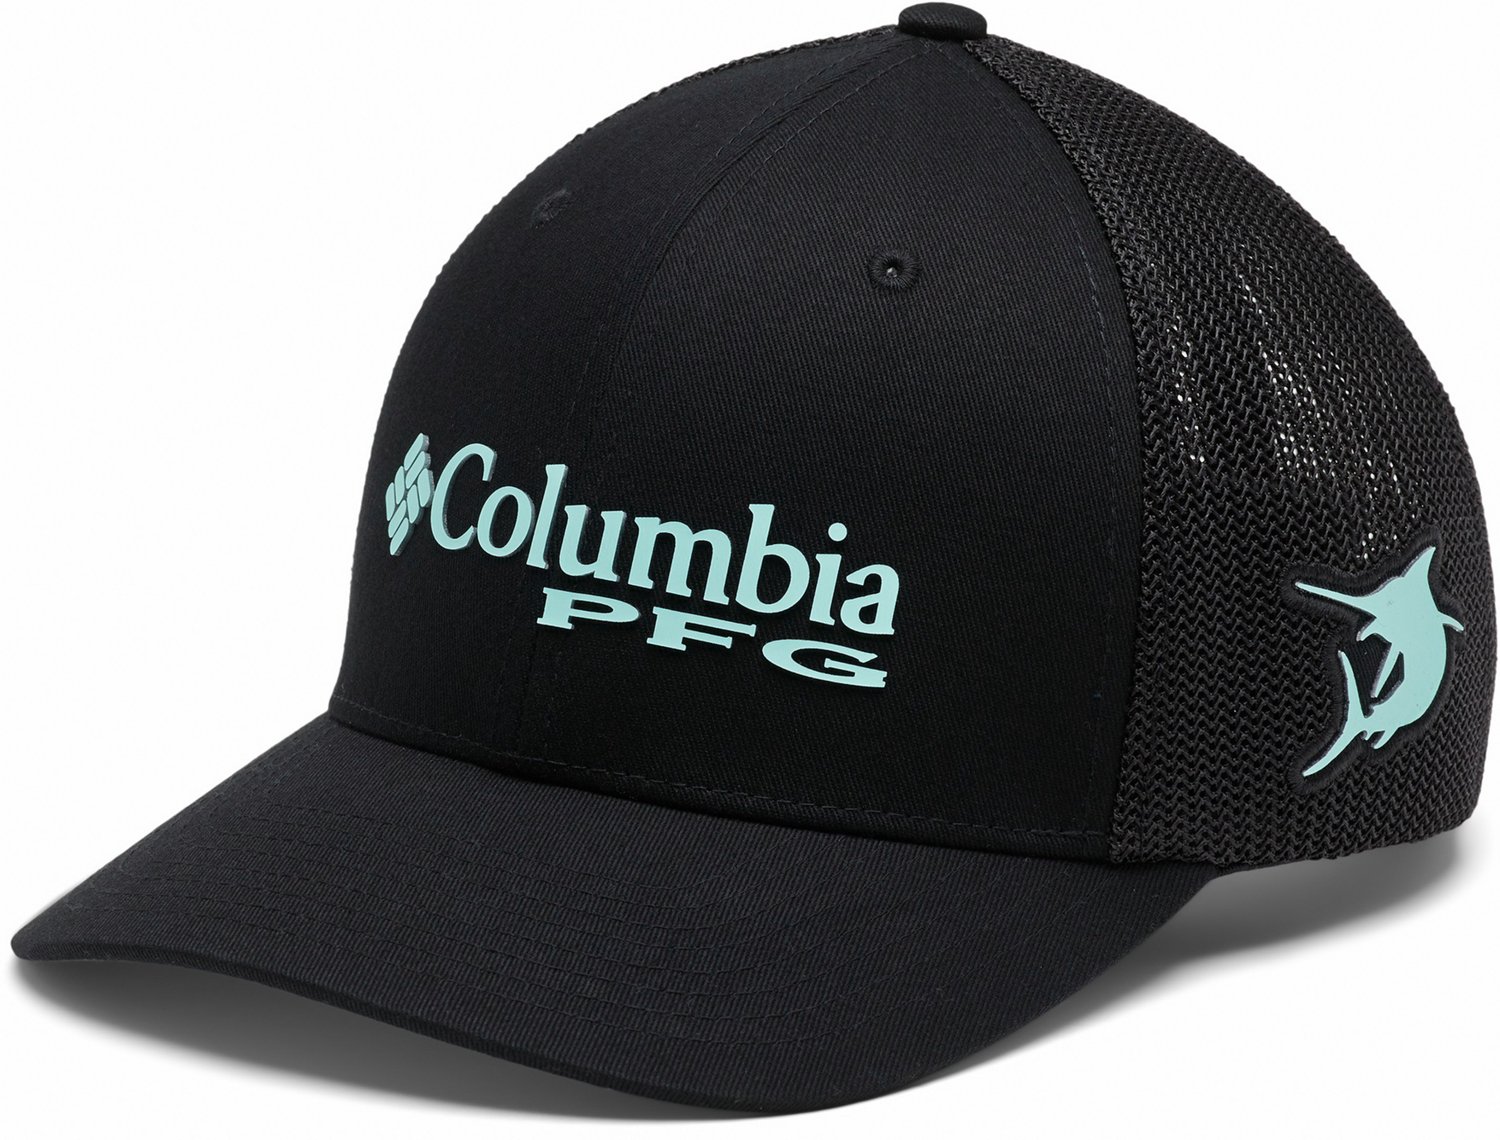 Academy Sports + Outdoors Columbia Sportswear Men's PFG Mesh Ball Cap